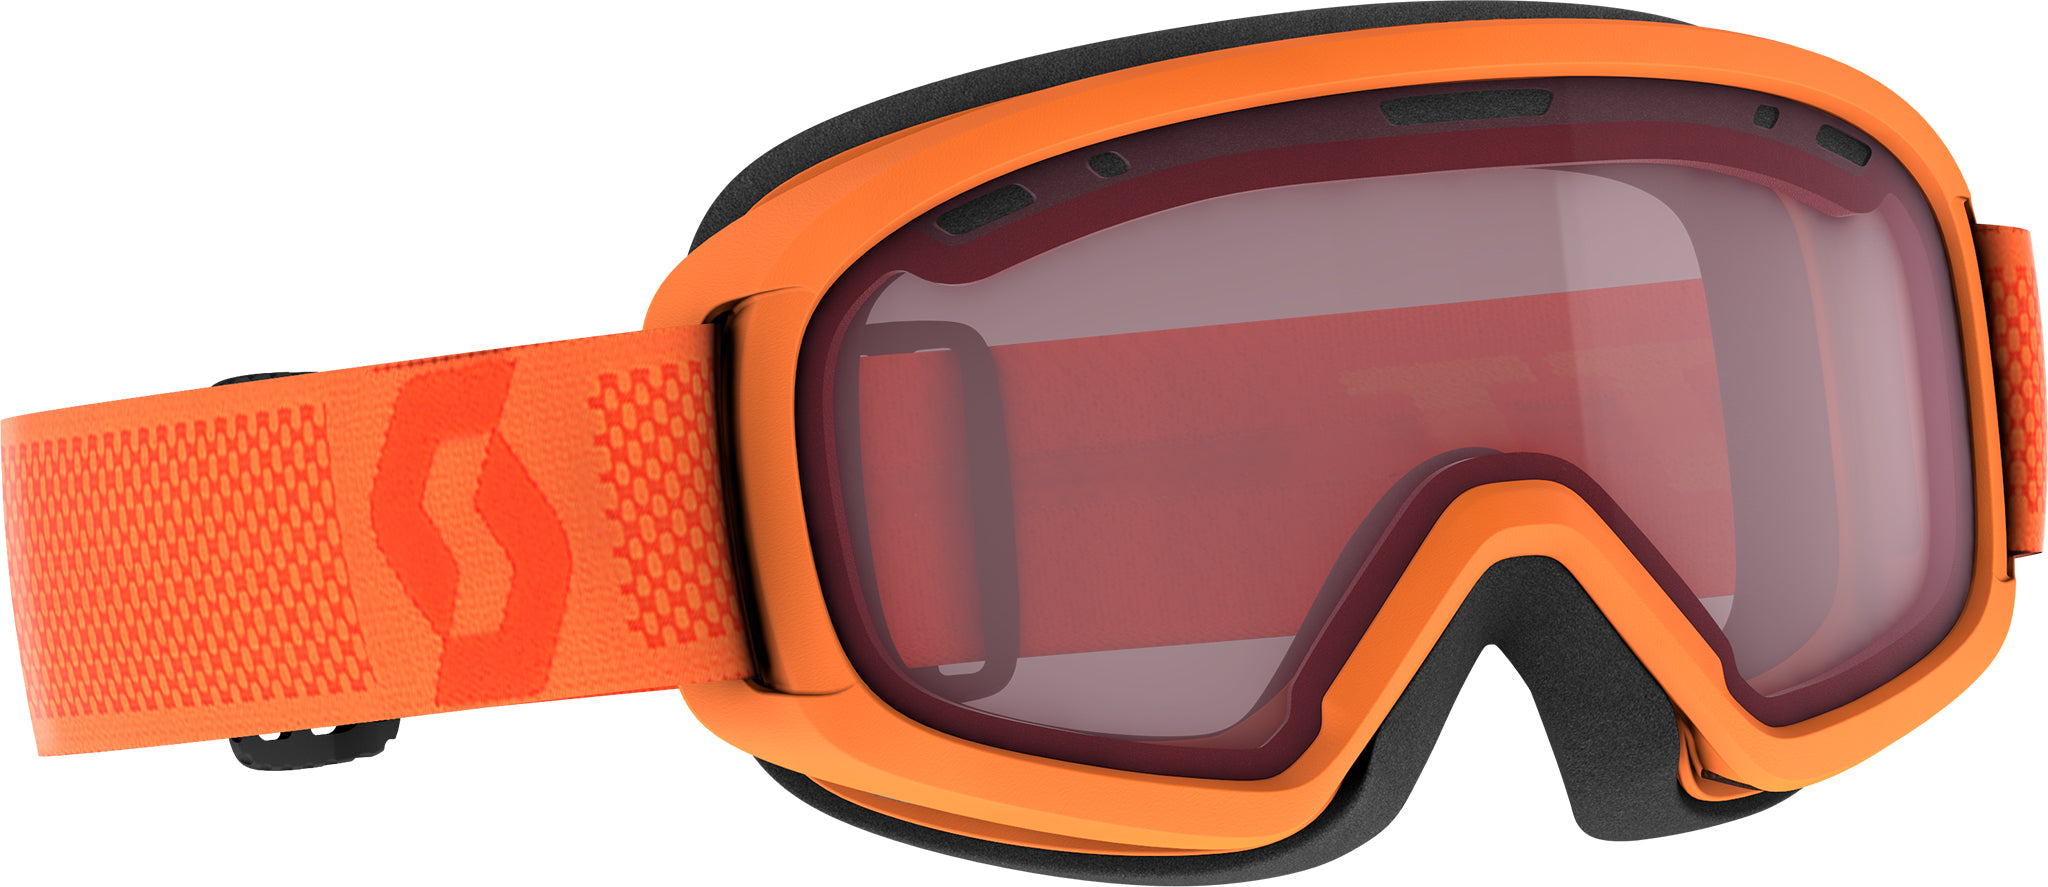 HEAD Unisexe Jeunes Junior Lunettes de Ski Ninja Orange Taille Unique